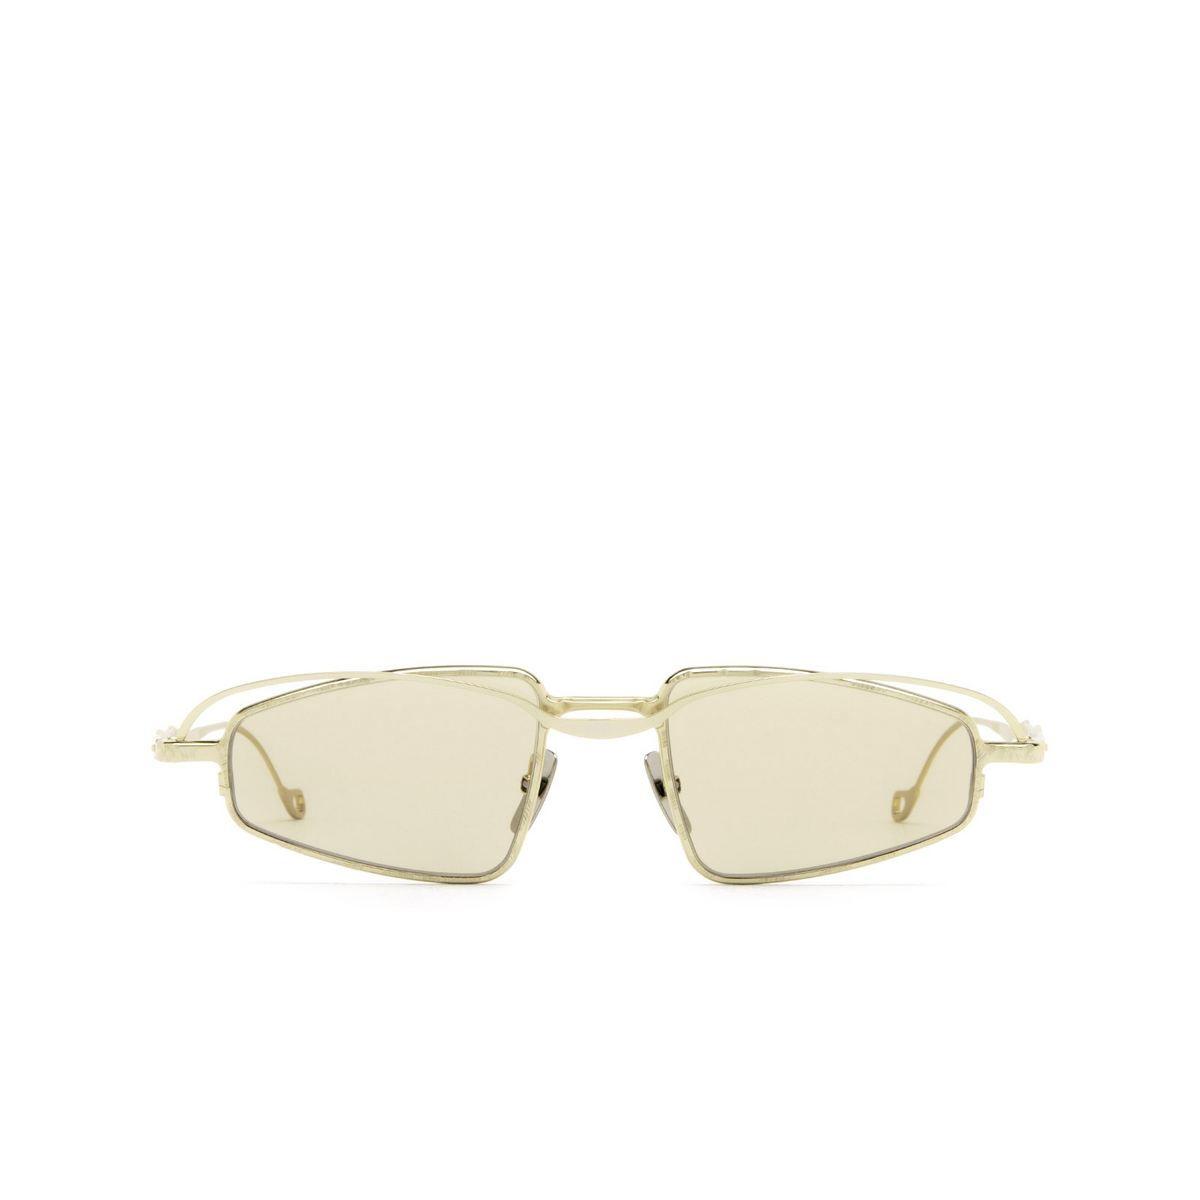 Kuboraum® Irregular Sunglasses: H73 color Gold Gg - front view.